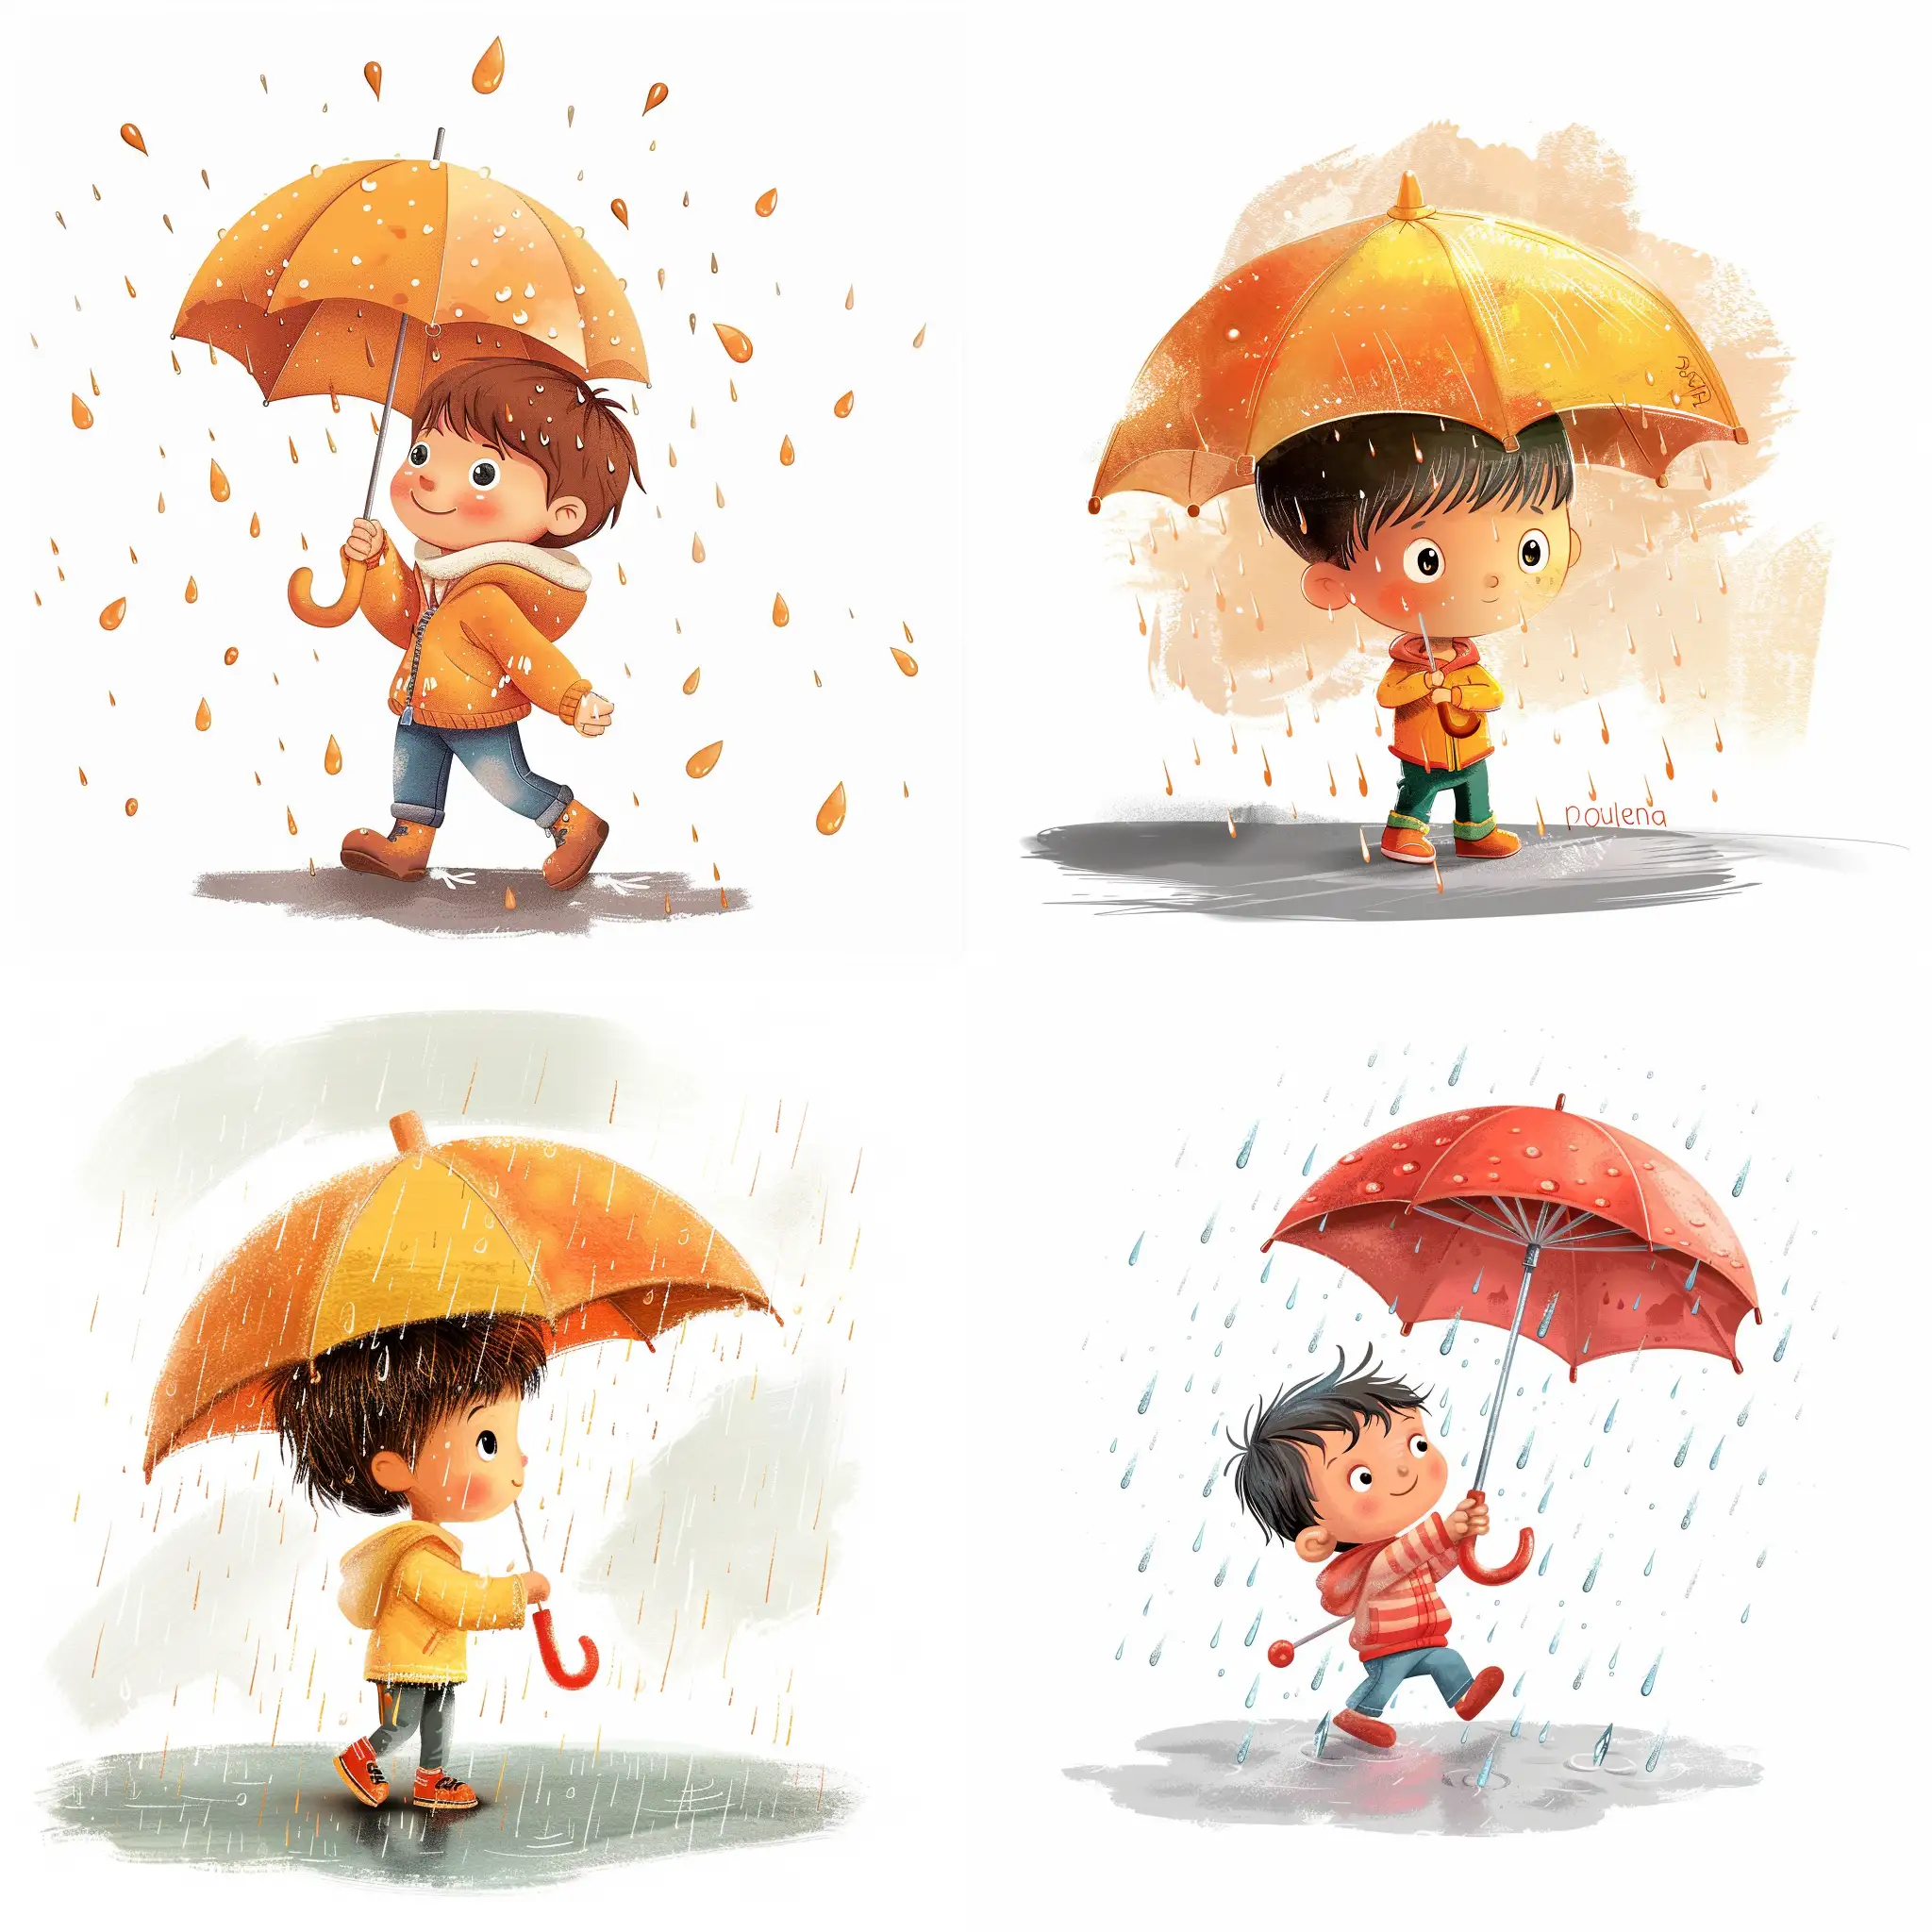 Adventurous-Little-Boy-with-Umbrella-in-Whimsical-Rainy-Scene